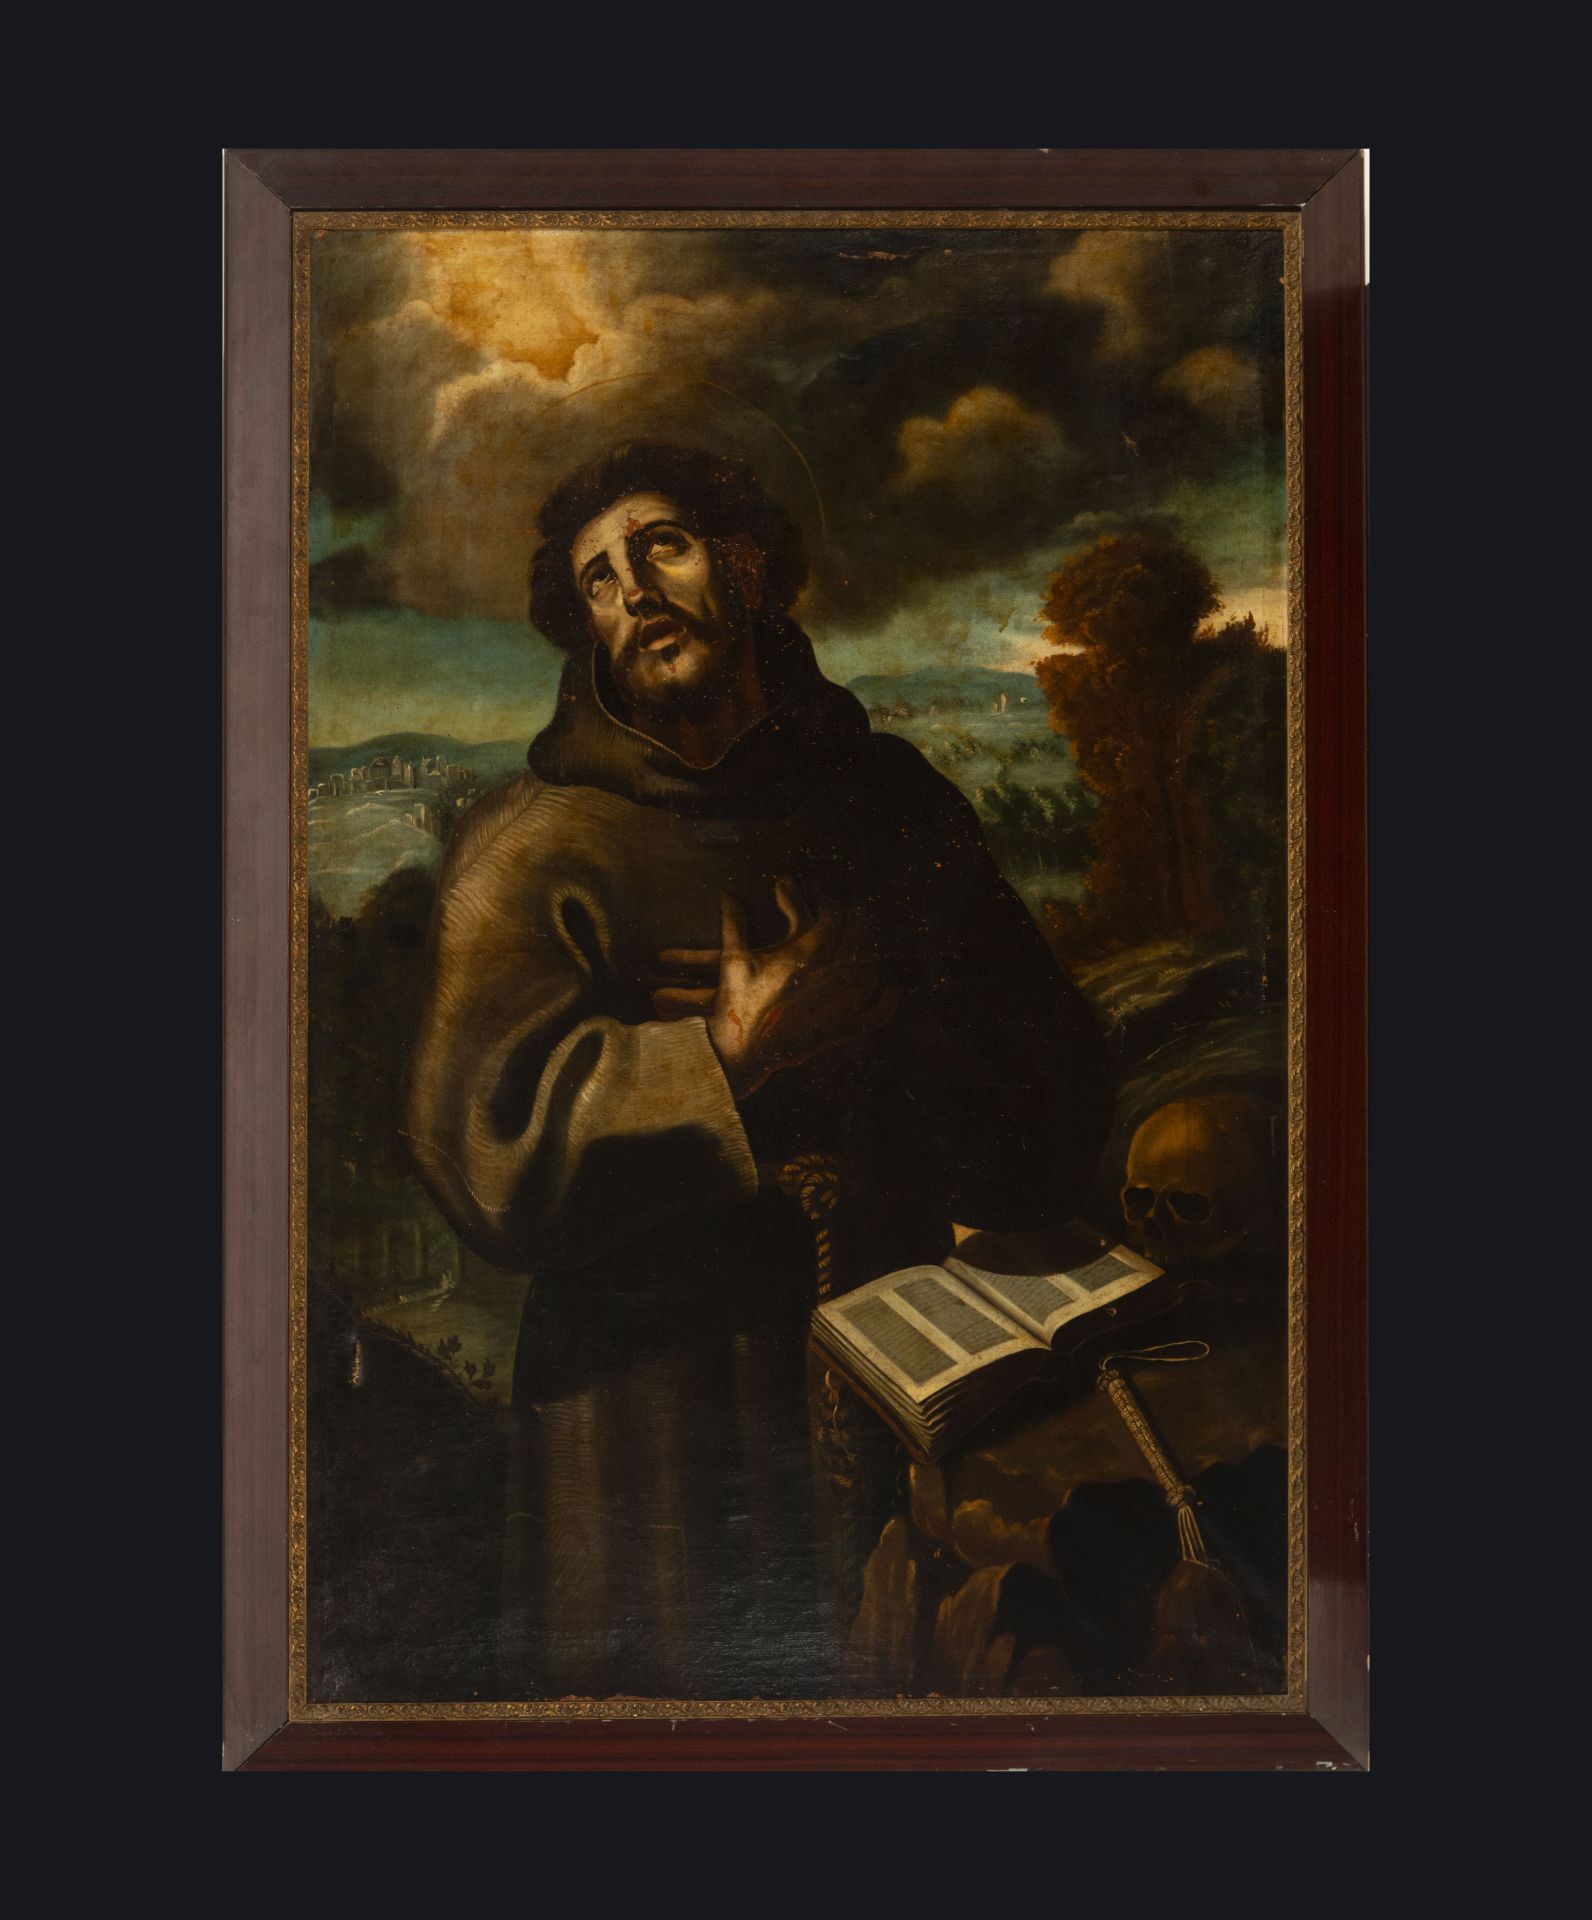 Important Great Saint Francis of Assisi in Meditation, Pedro de Orrente (Murcia, 1580-Valencia, 1645